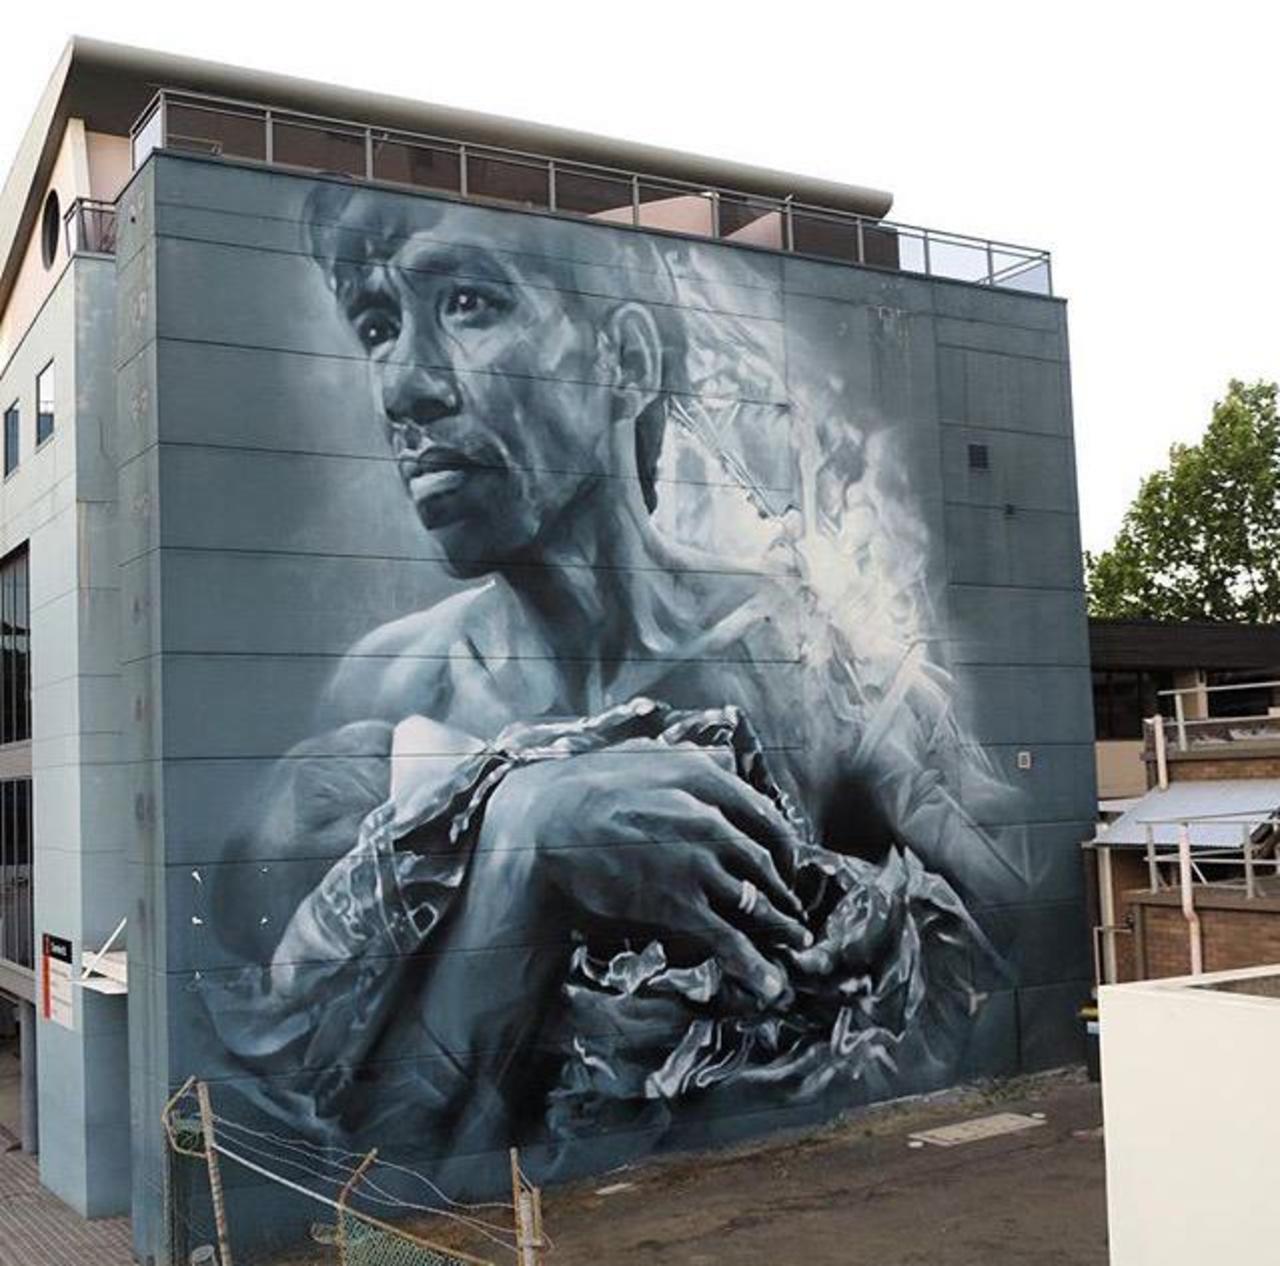 New Street Art by Guido Van Helten in Wollongong Australia 

#art #graffiti #mural #streetart http://t.co/dsrARlWNQP